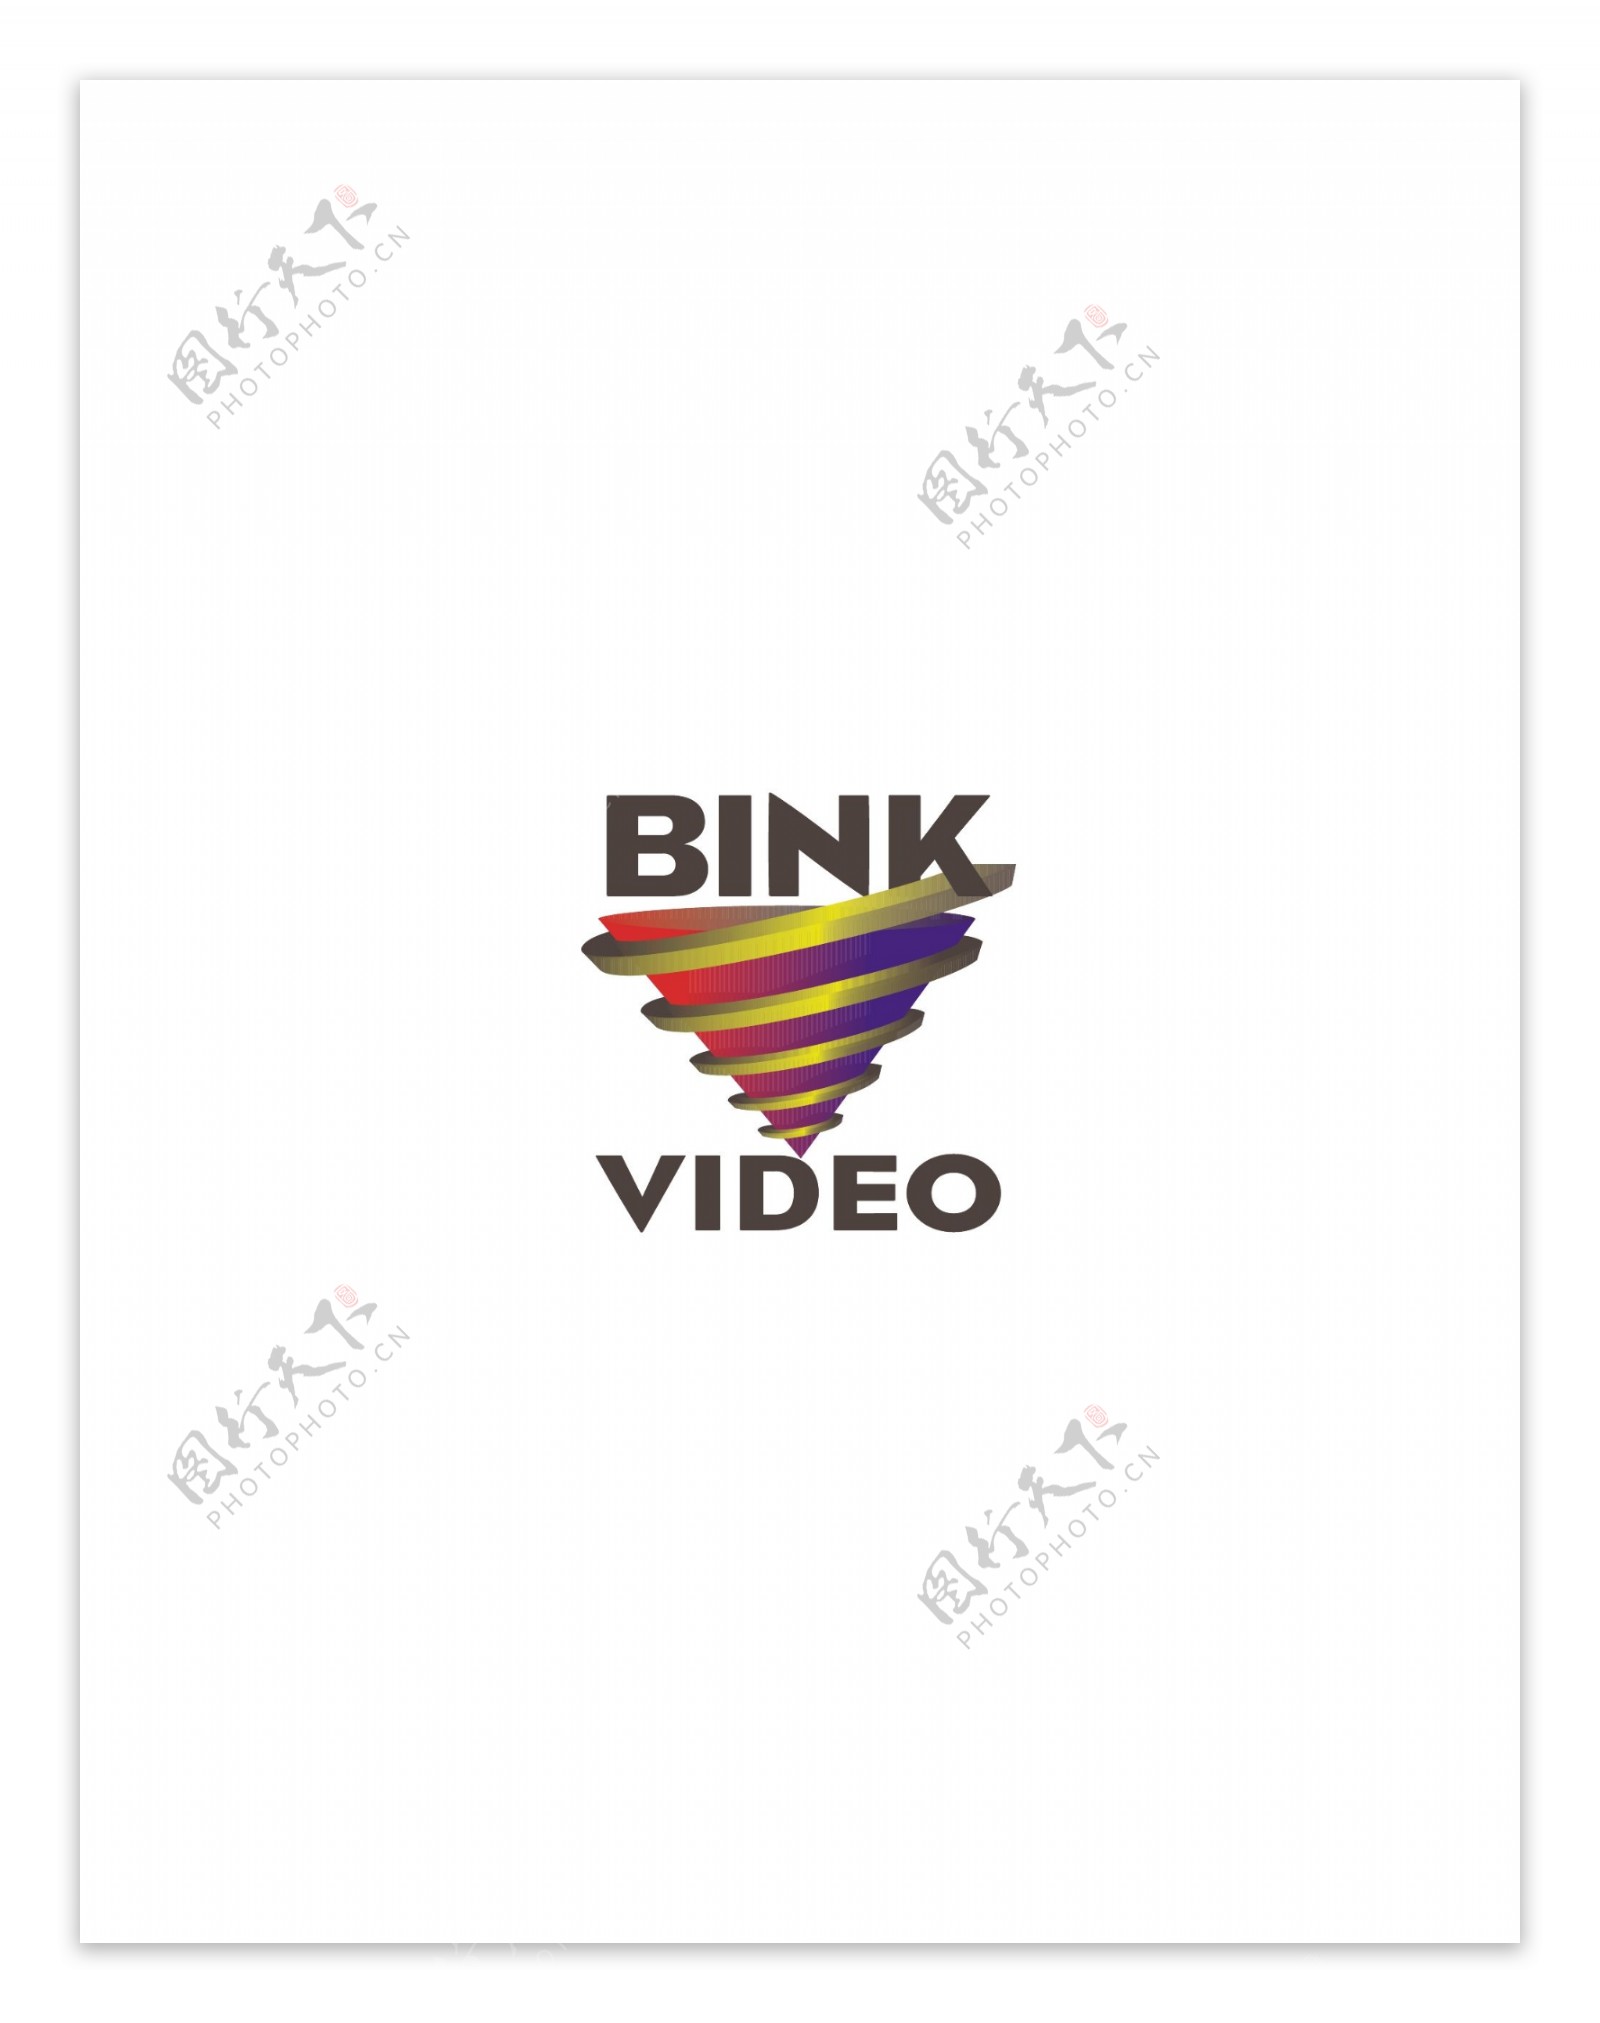 BinkVideologo设计欣赏国外知名公司标志范例BinkVideo下载标志设计欣赏